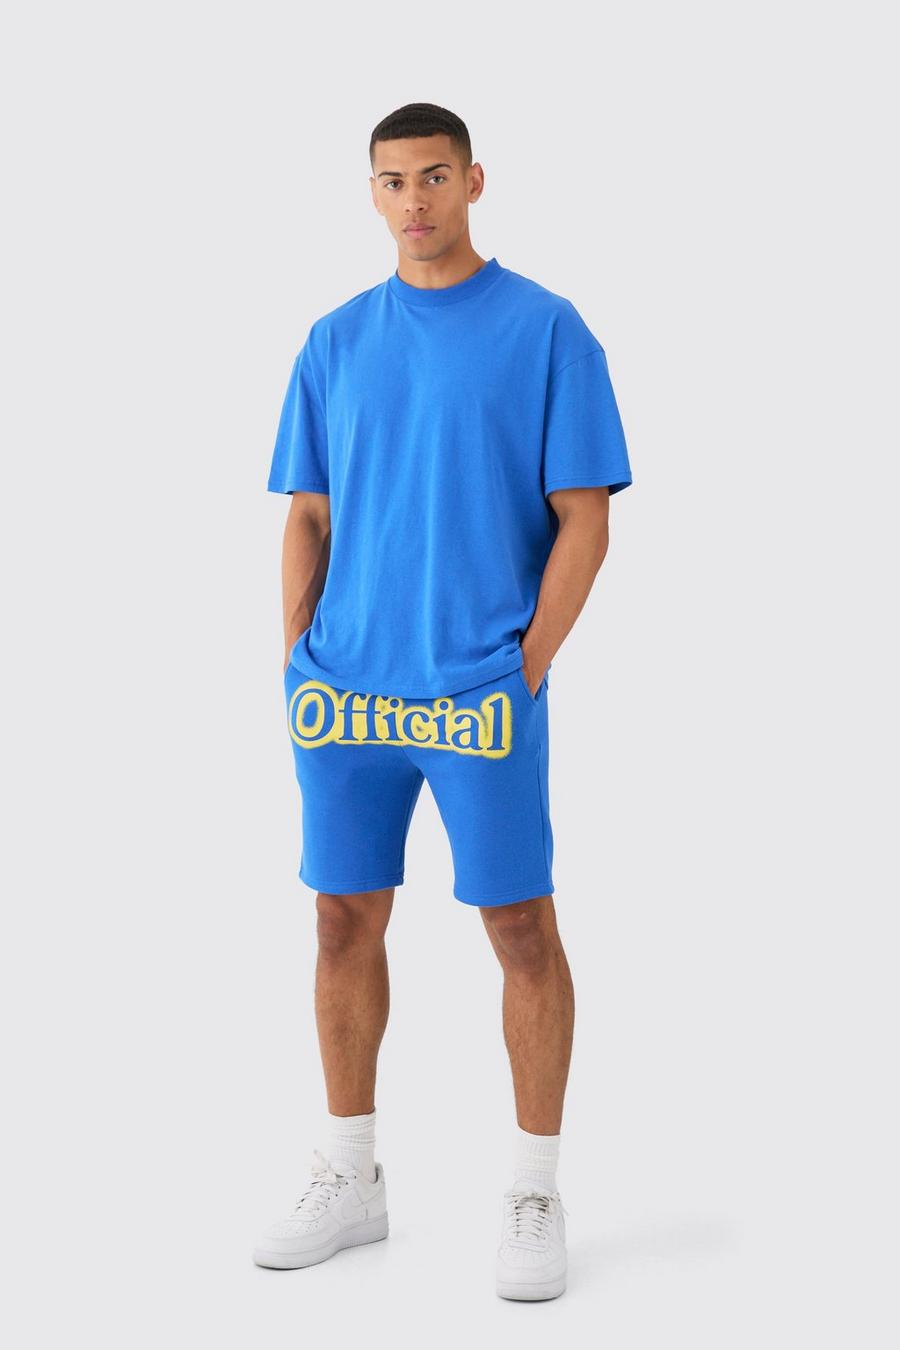 Cobalt Oversized Extended Neck Official Spray Graffiti T-shirt And Shorts Set